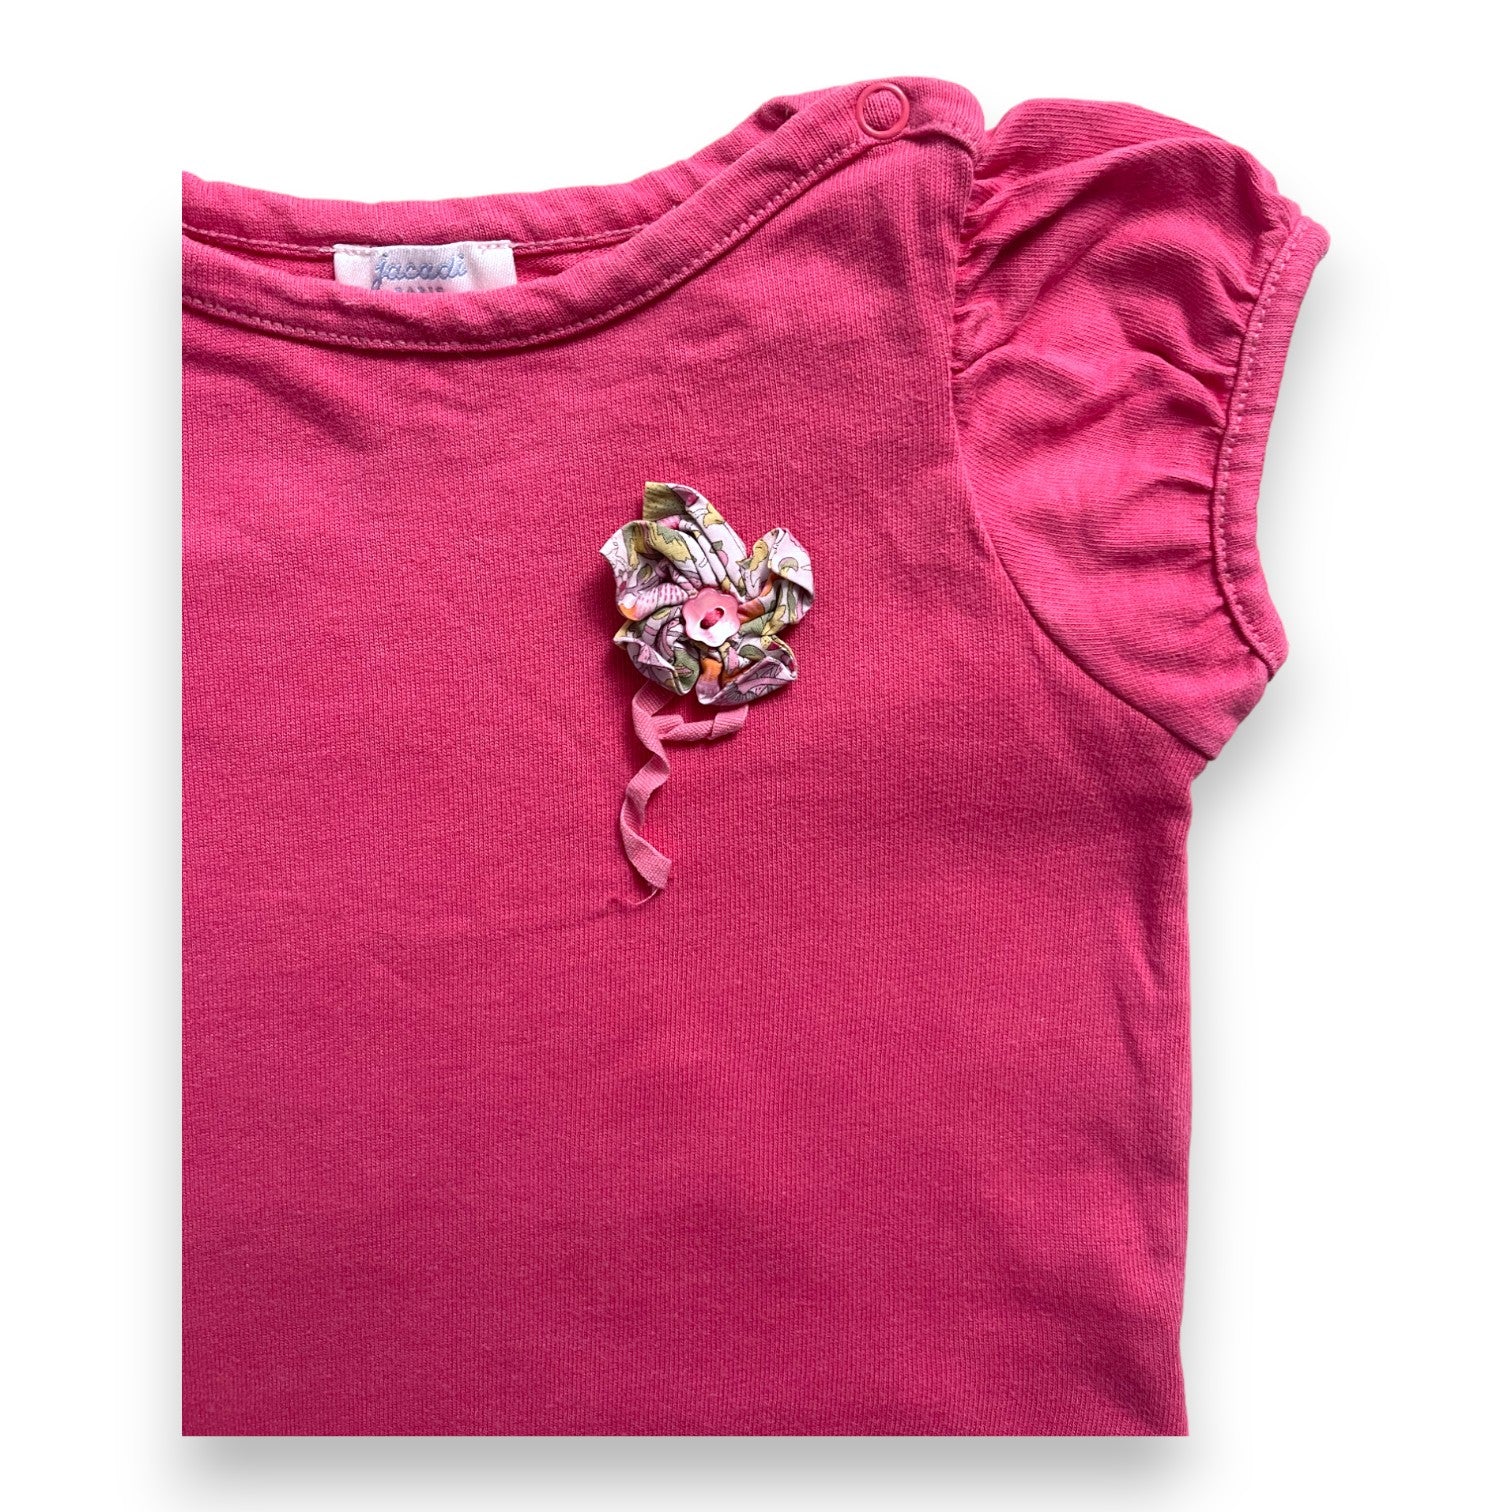 JACADI - T shirt rose fleur multicolore - 18 mois